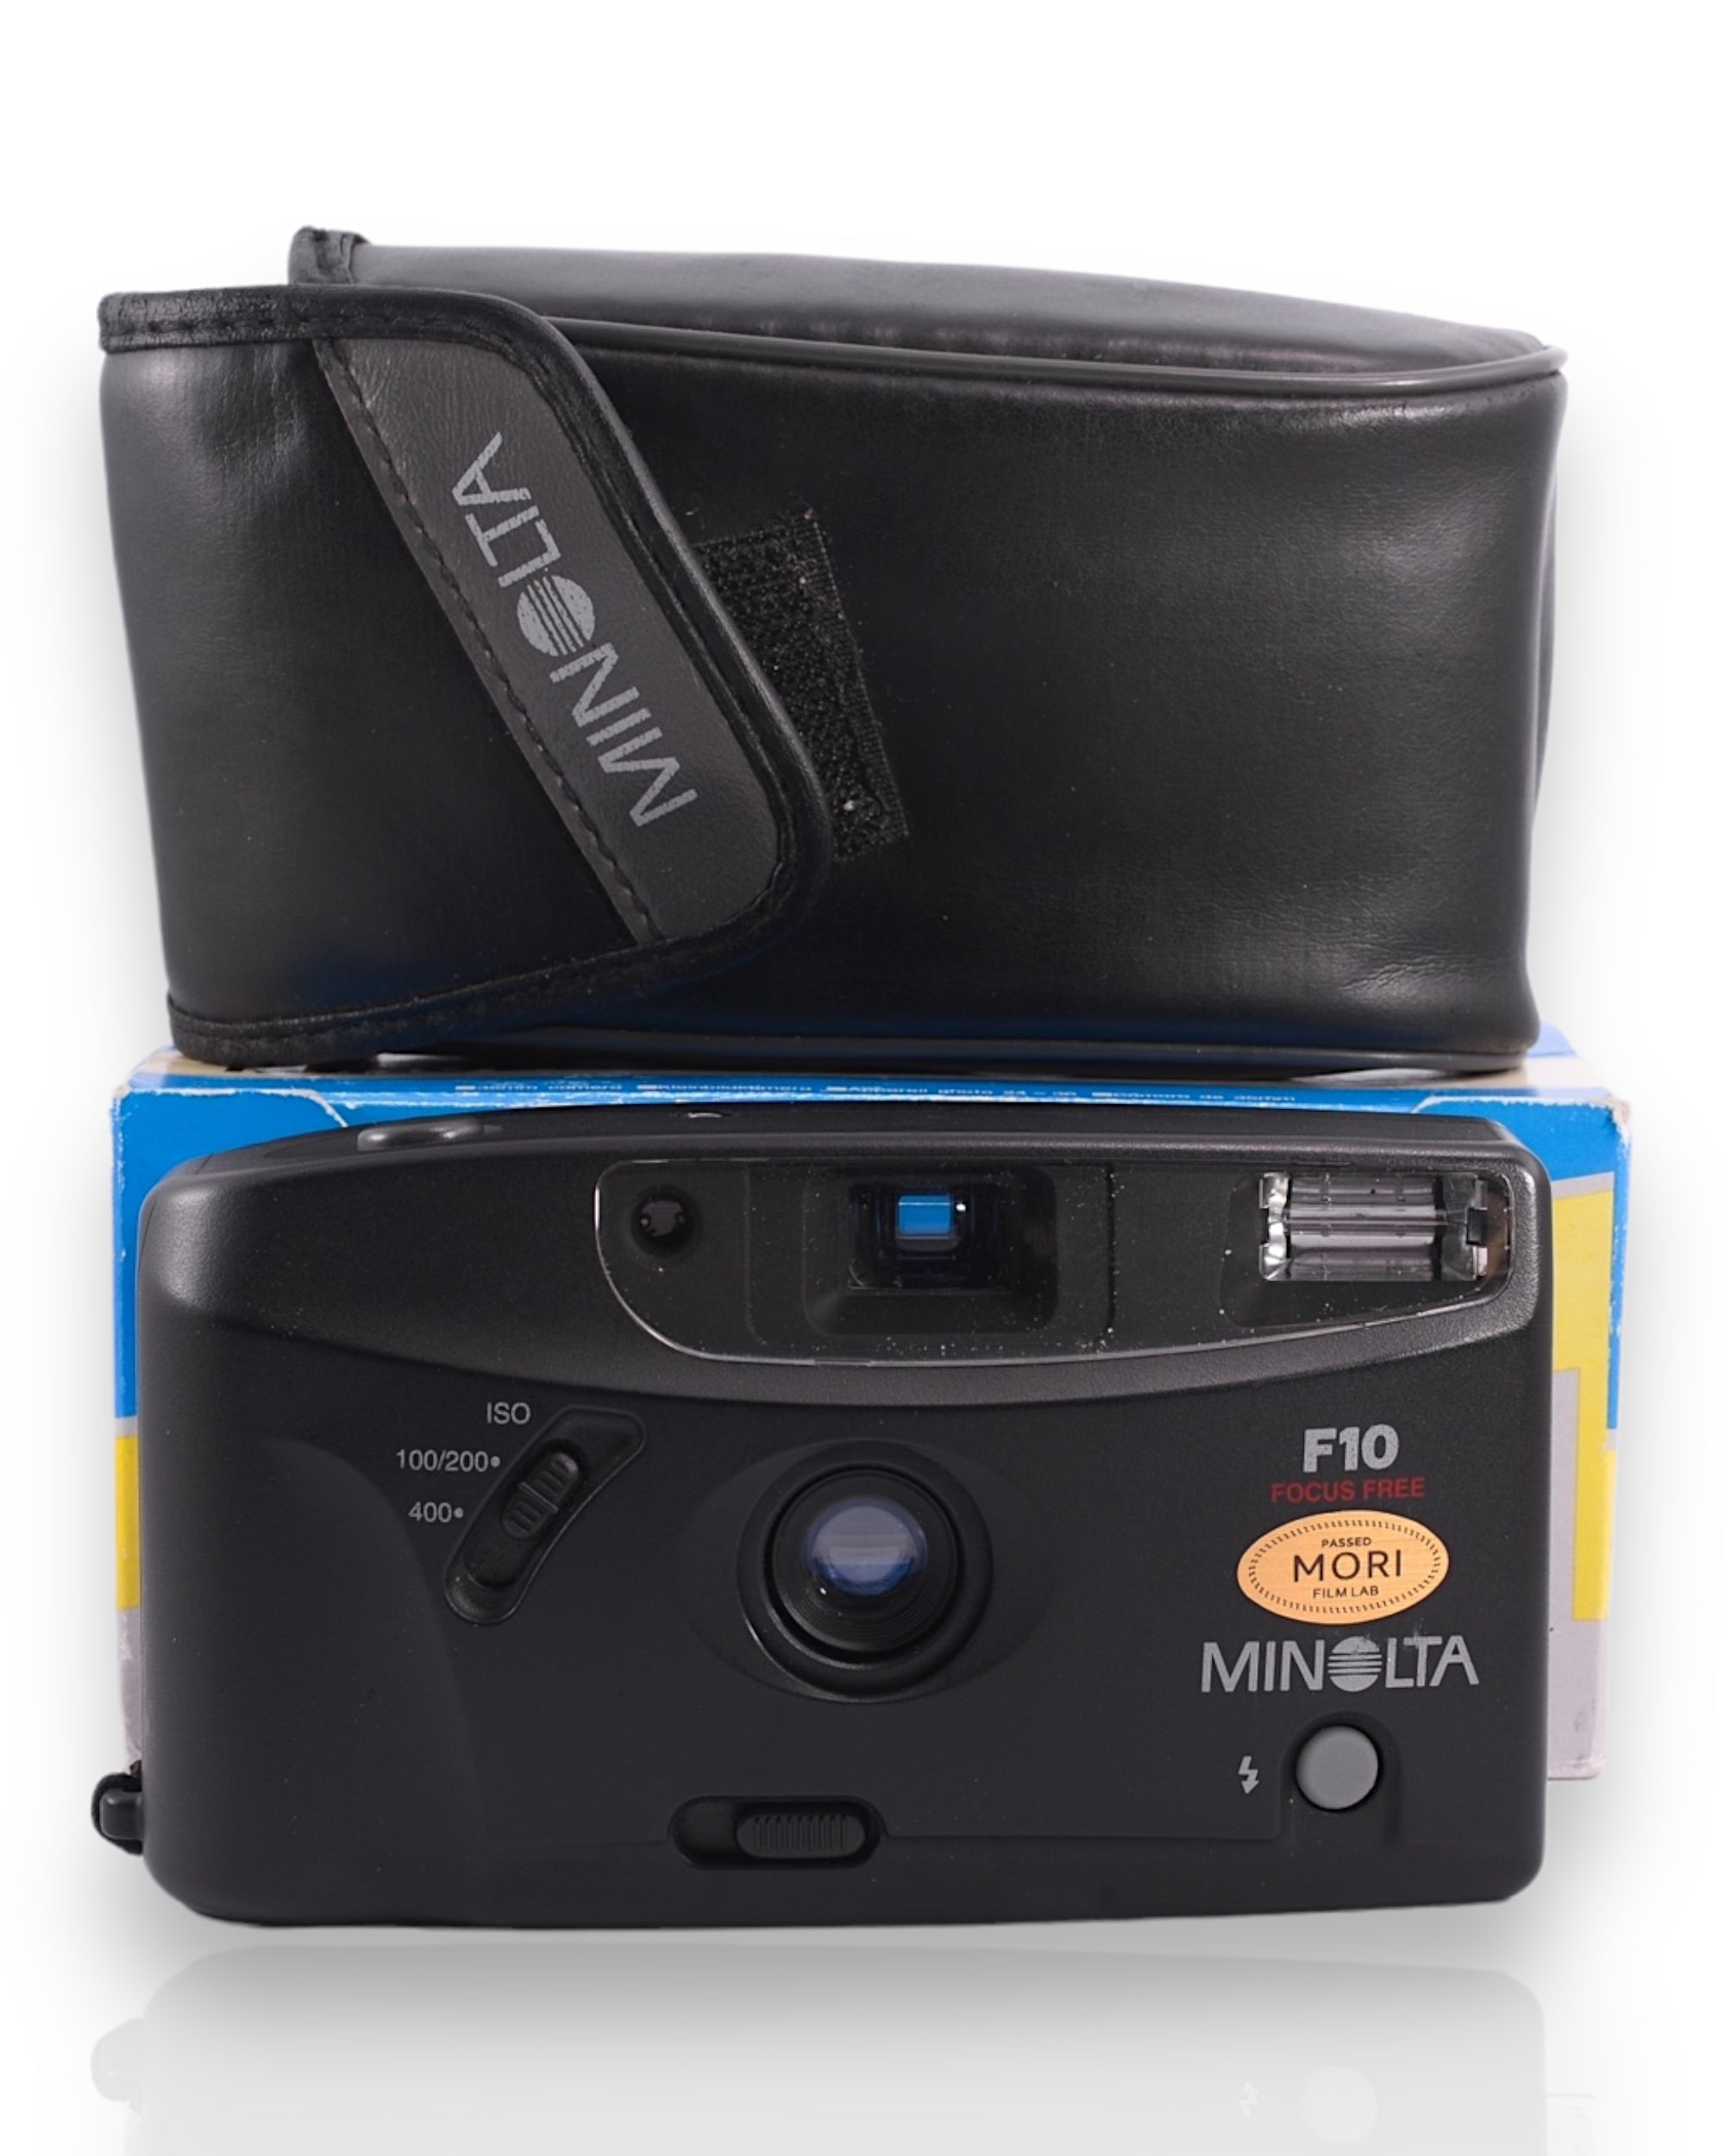 Boxed Minolta F10 35mm Point & Shoot Camera